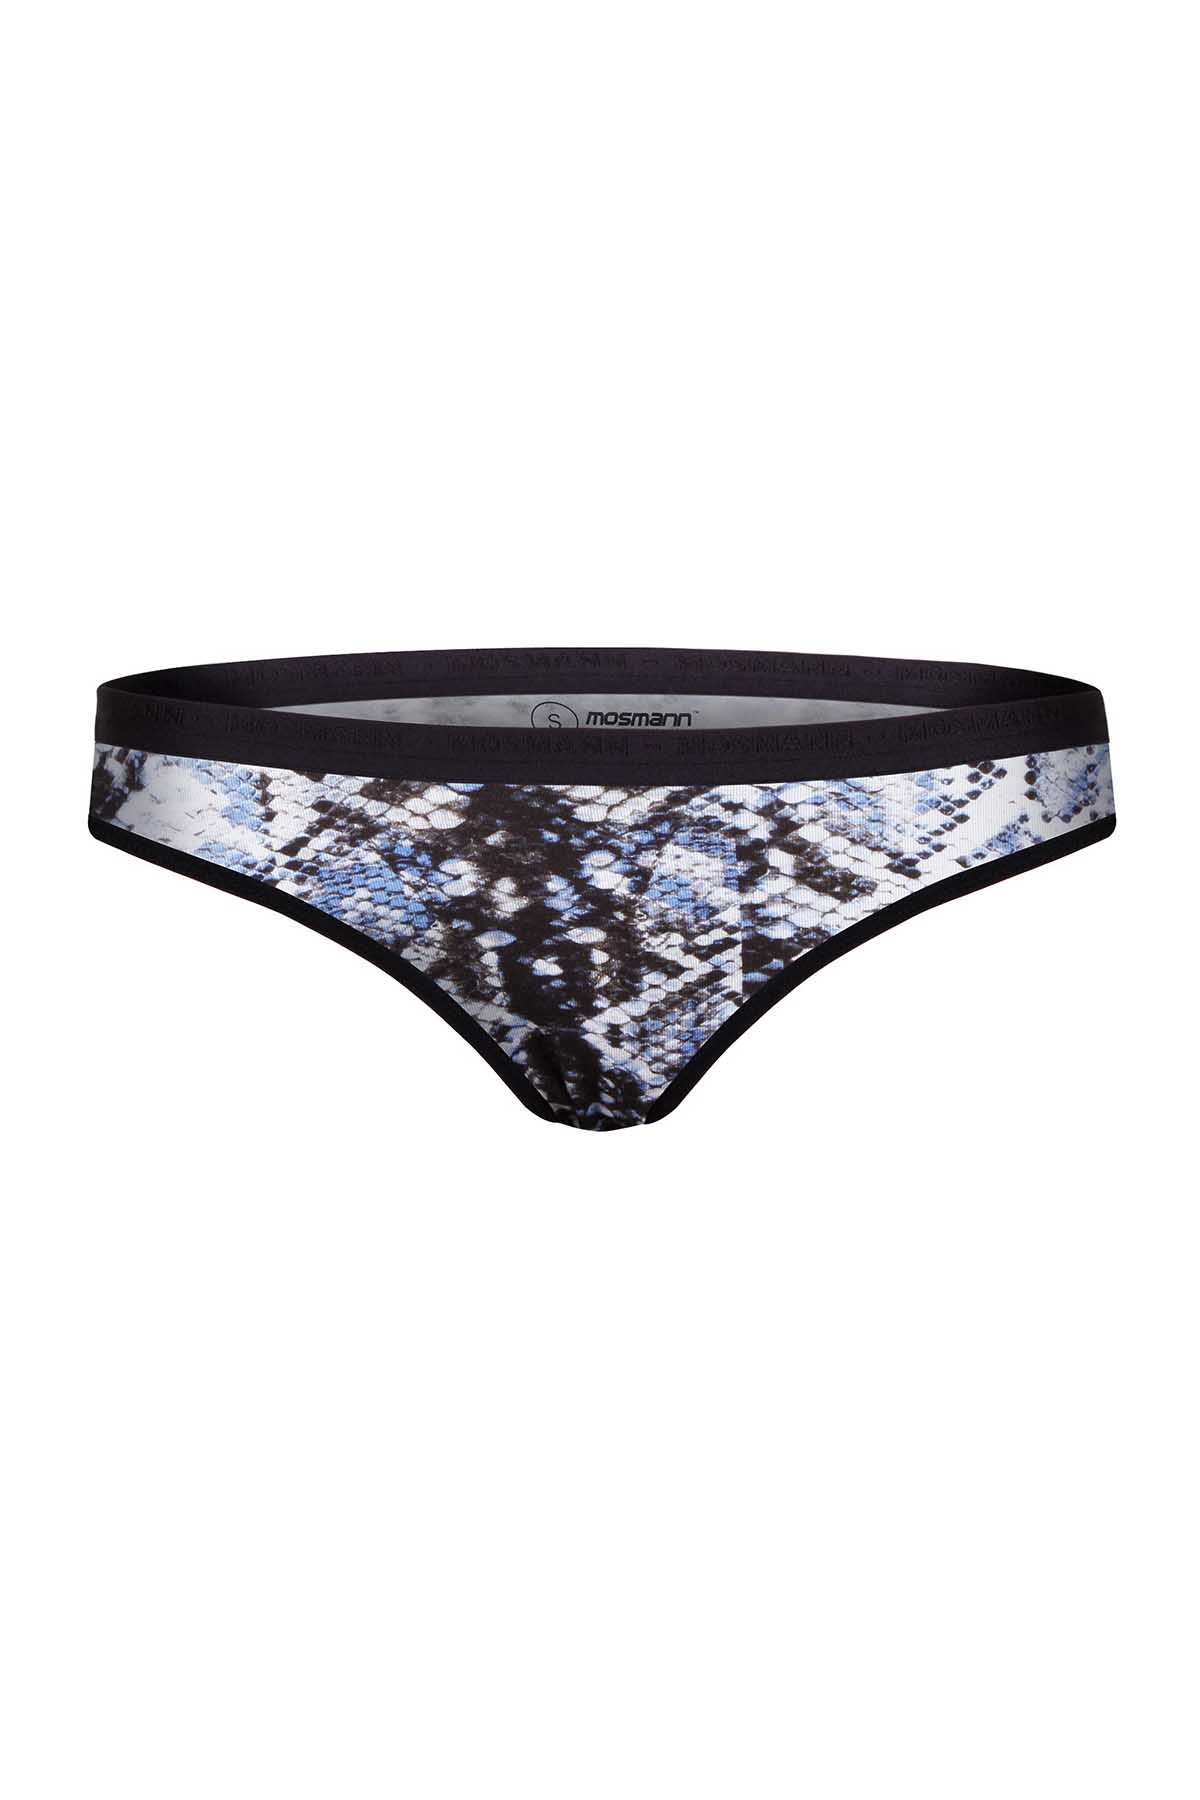 Mosmann Python Sophia Bikini Brief Panty | CheapUndies